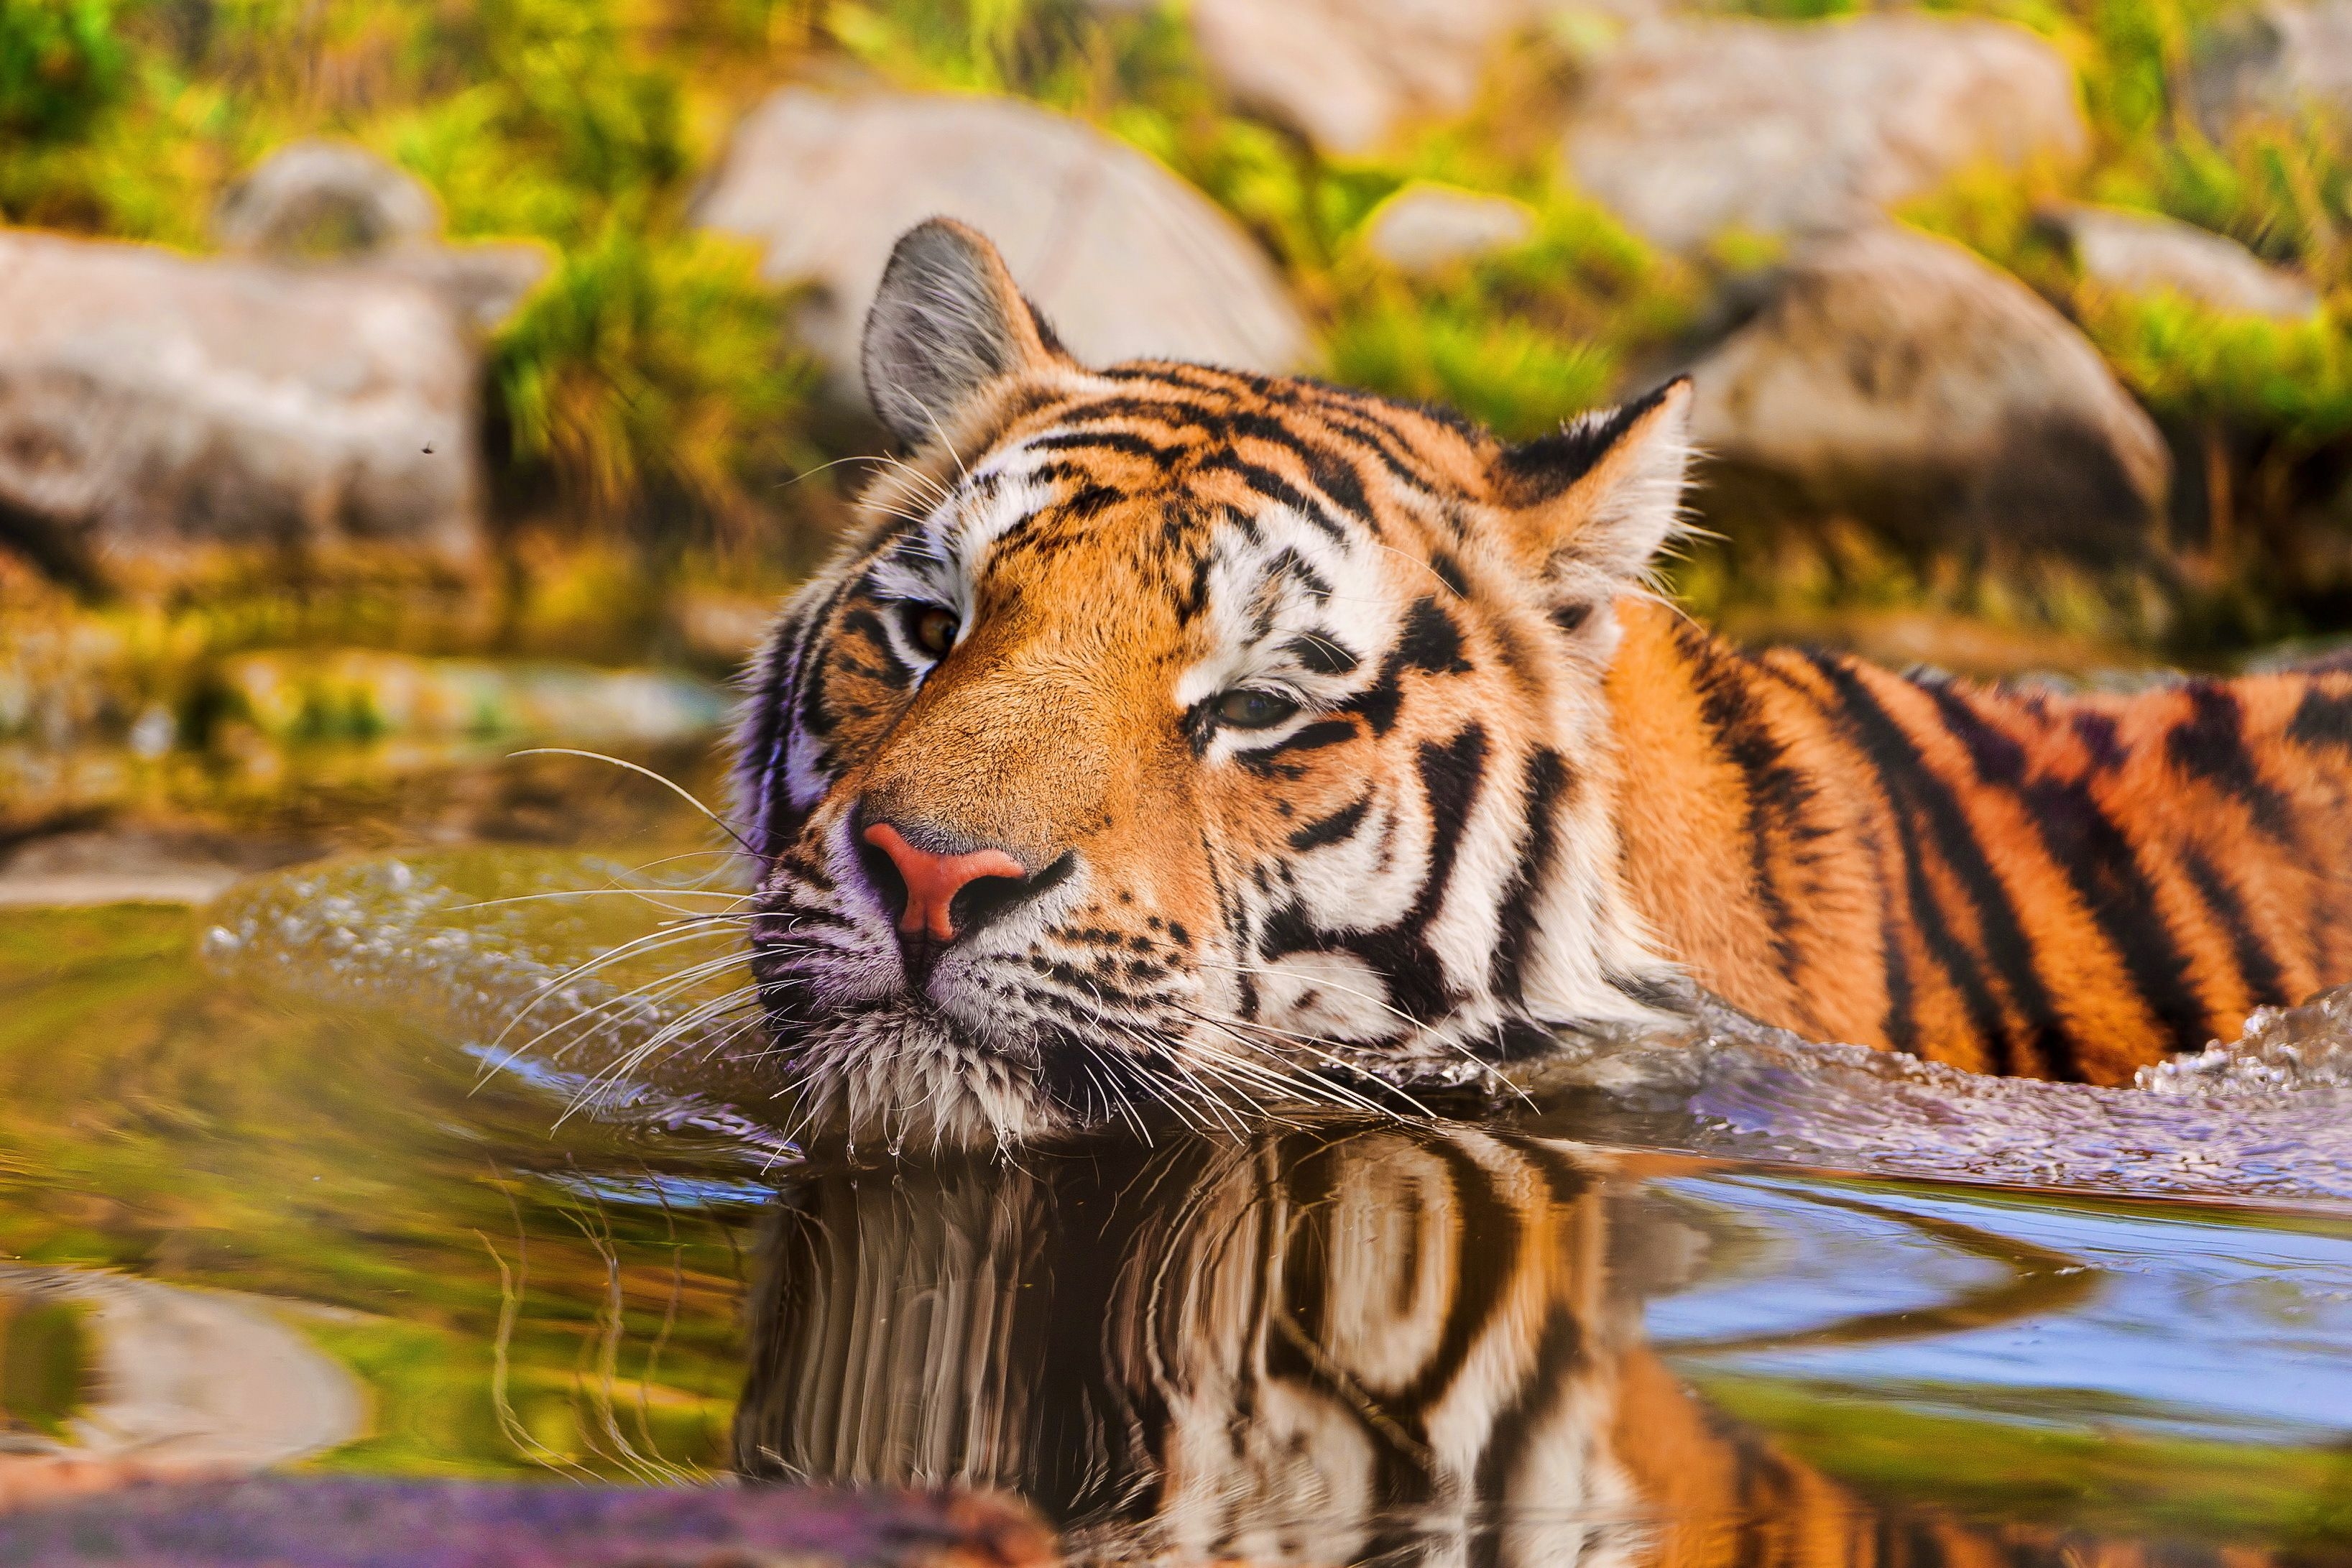 146366 descargar imagen animales, agua, bozal, tigre, nadar: fondos de pantalla y protectores de pantalla gratis